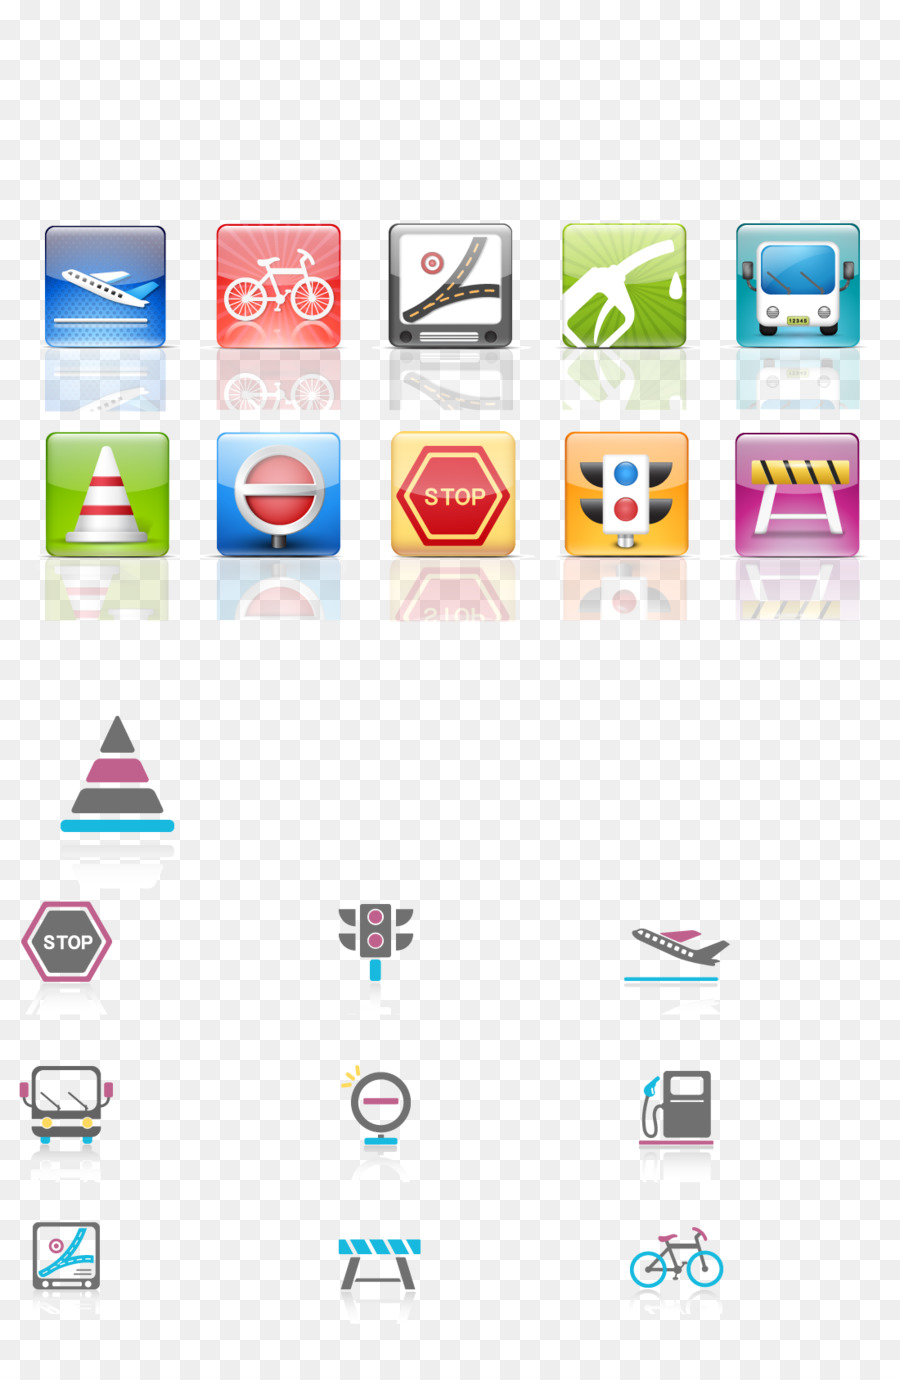 Download Icon Design Icon - Fahrrad, Flugzeug, Ampel, stop-signal